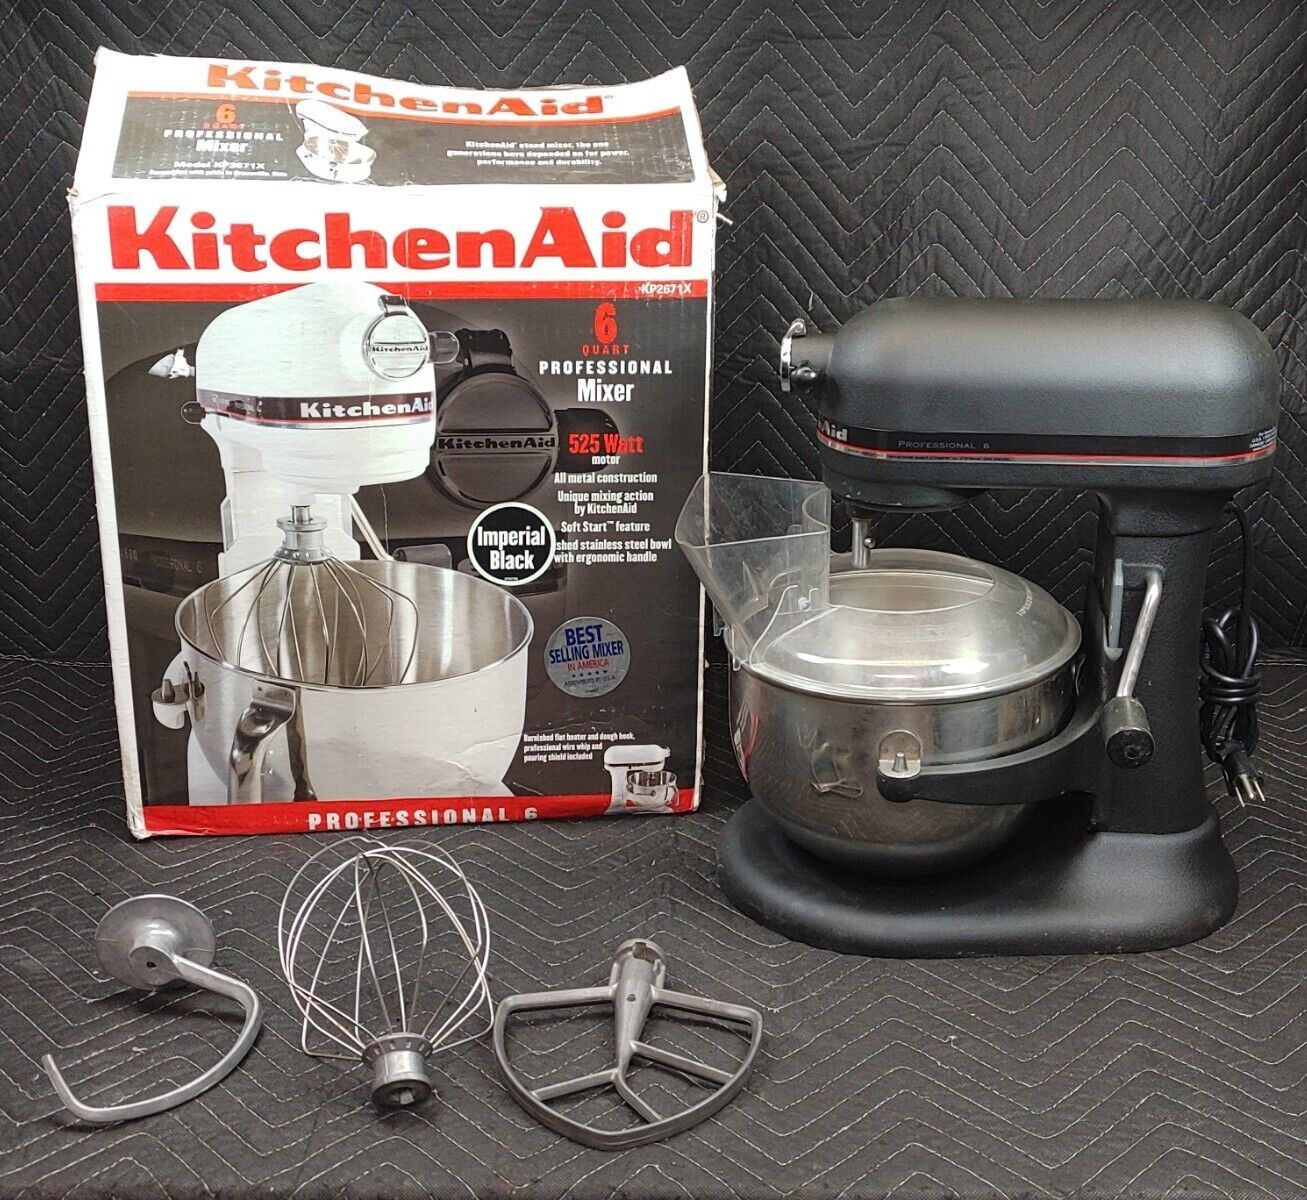 Kitchenaid 6 Quart Bowl-Lift Stand Mixer with Pouring Shield, 1